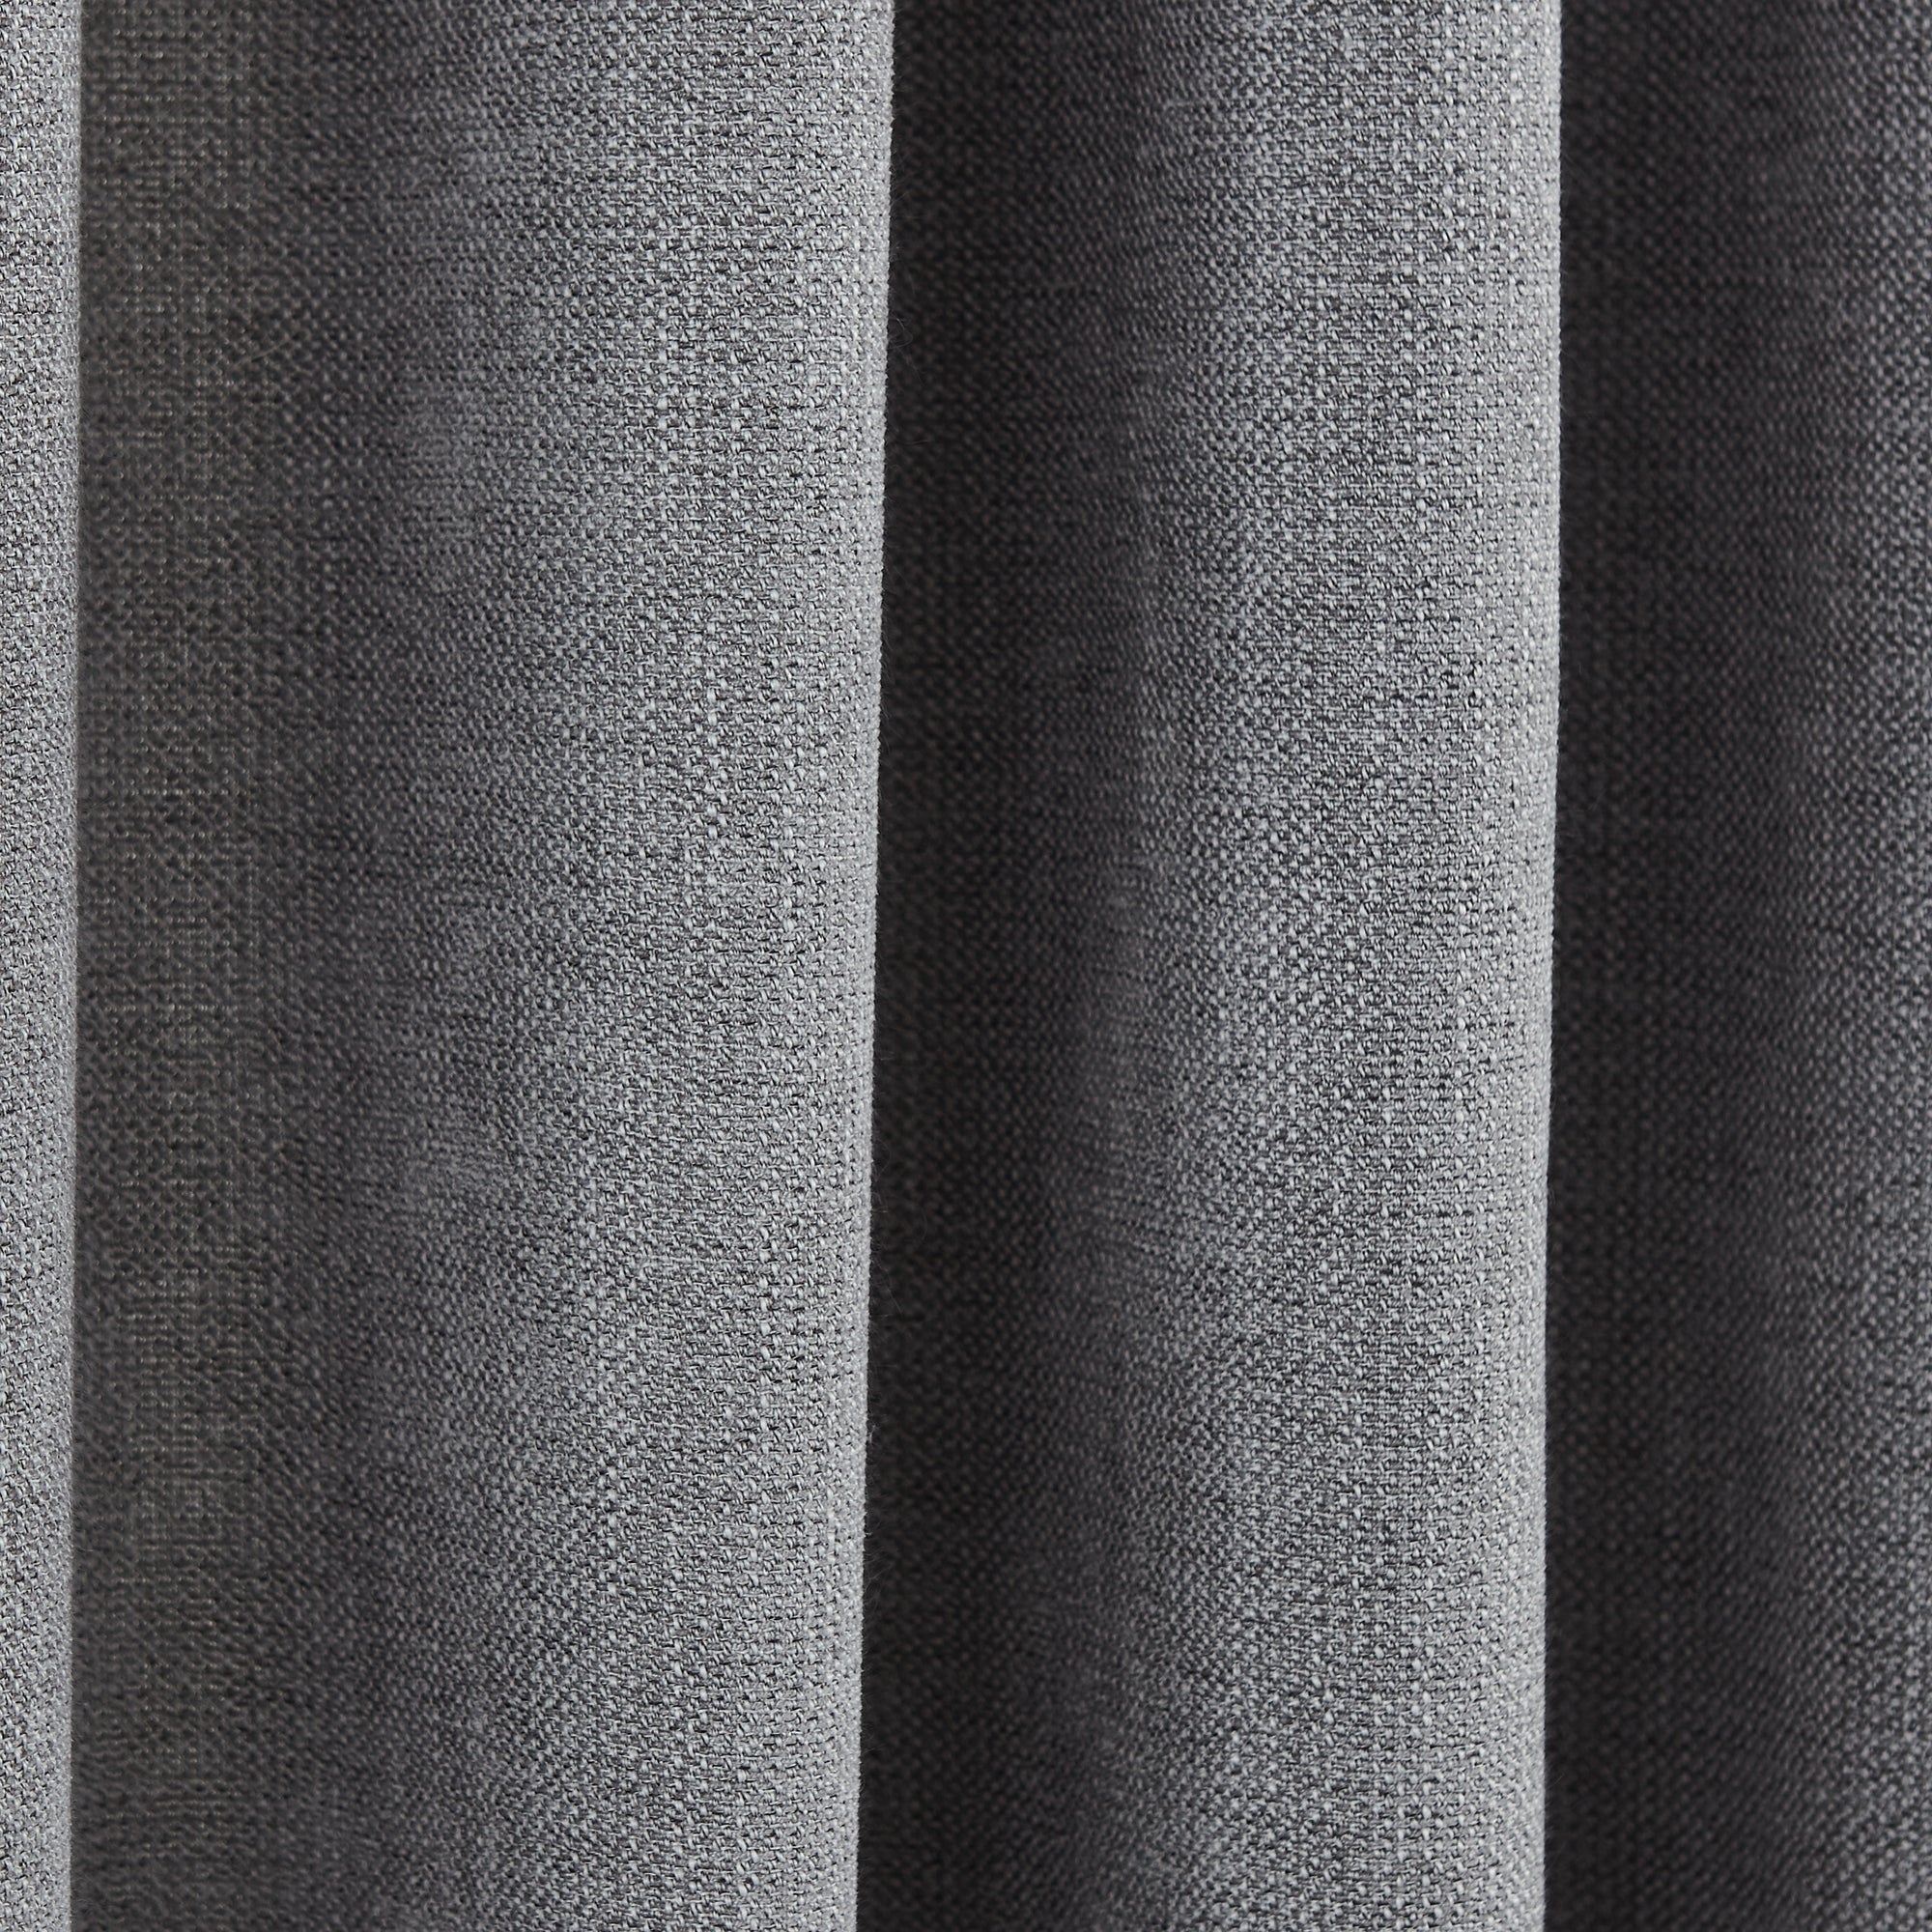 Wynter Grey Thermal Eyelet Curtains | Dunelm